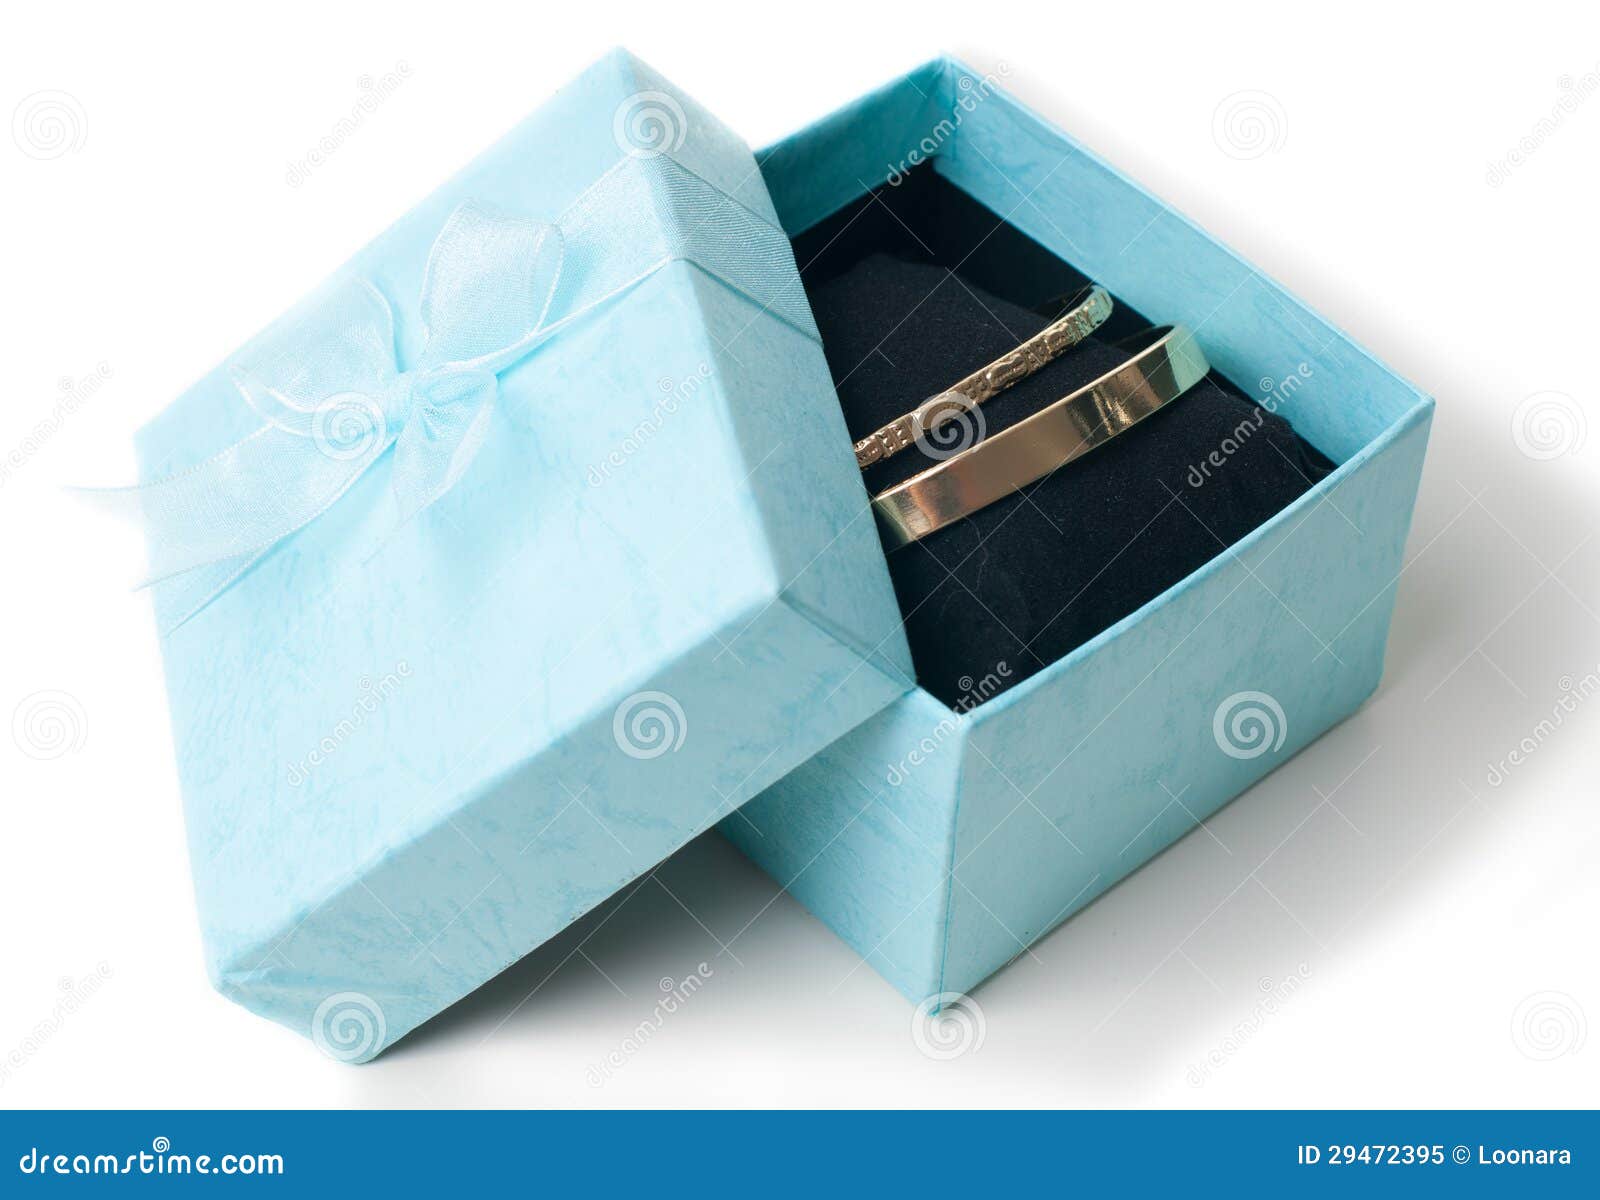 Fashion jewelry, two women's golden bracelets in opened gift box ...